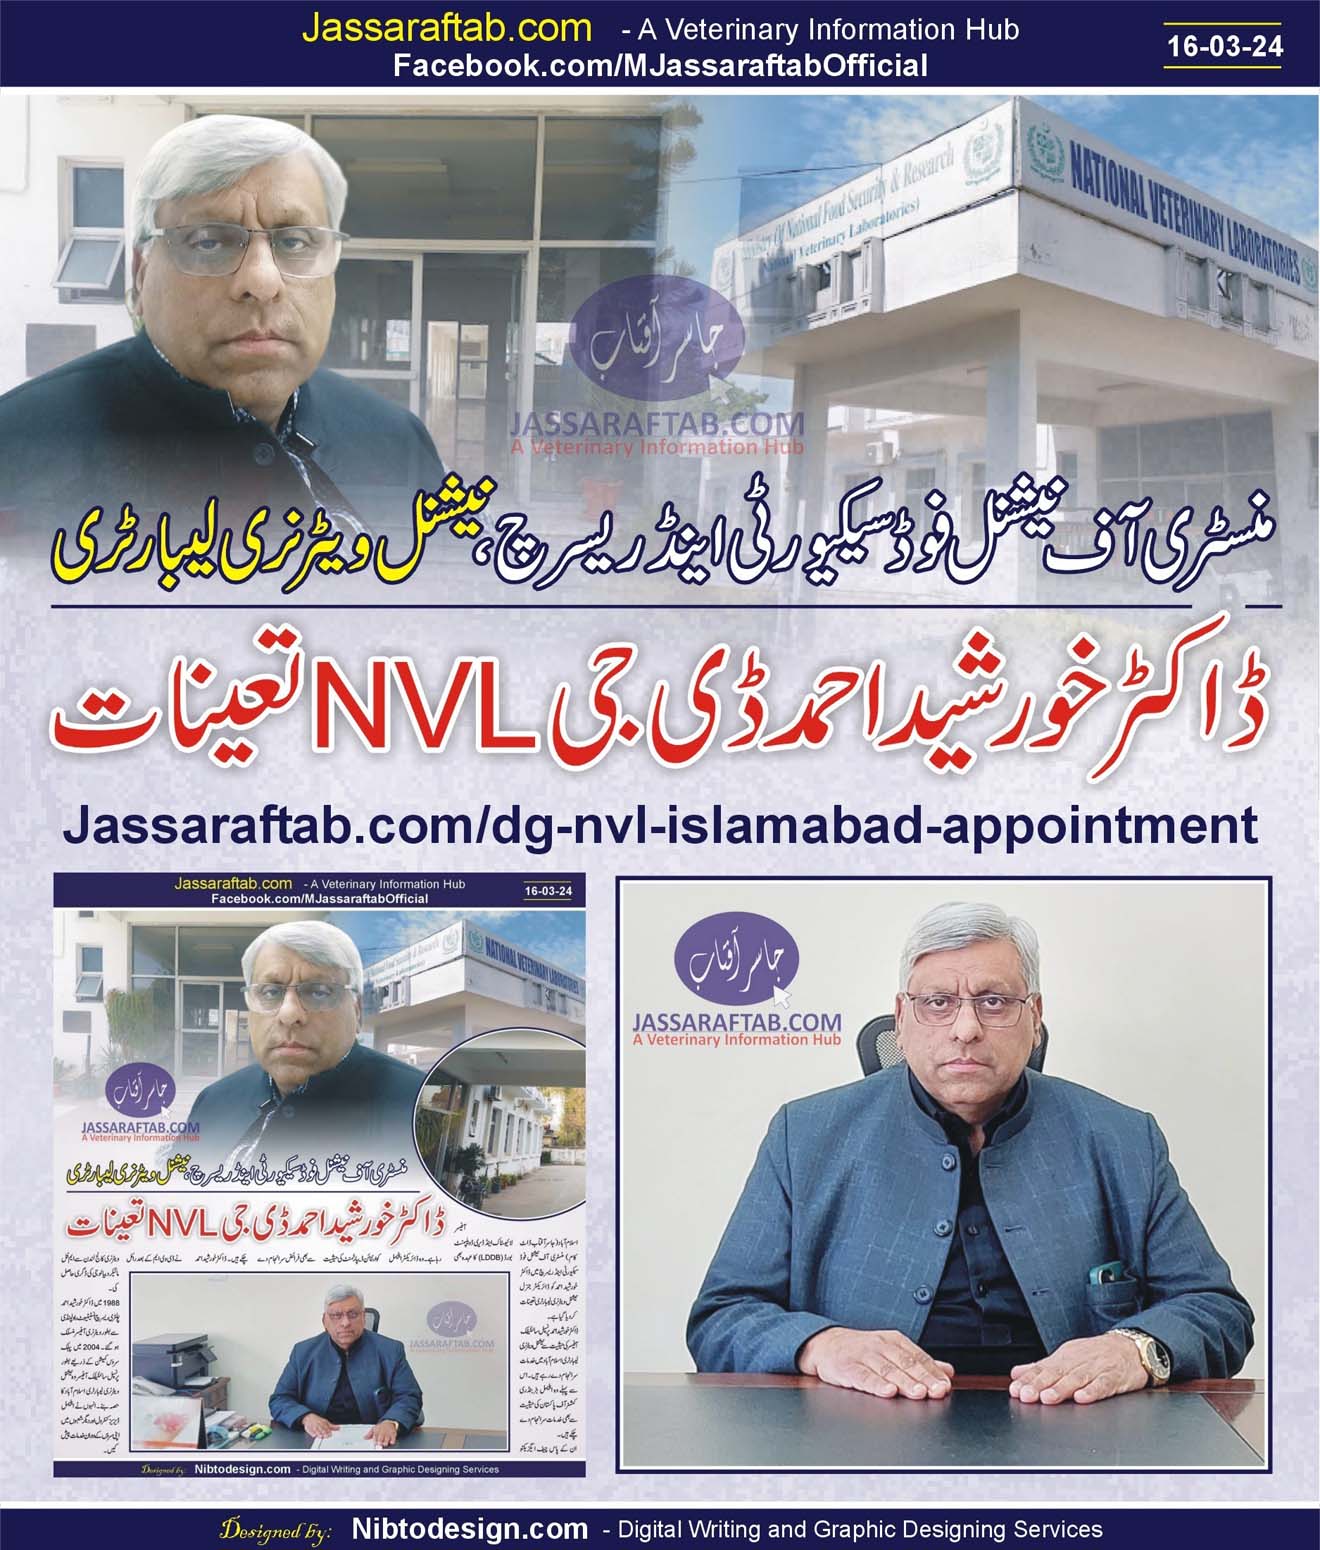 National Veterinary Laboratory - National Veterinary Lab Islamabad